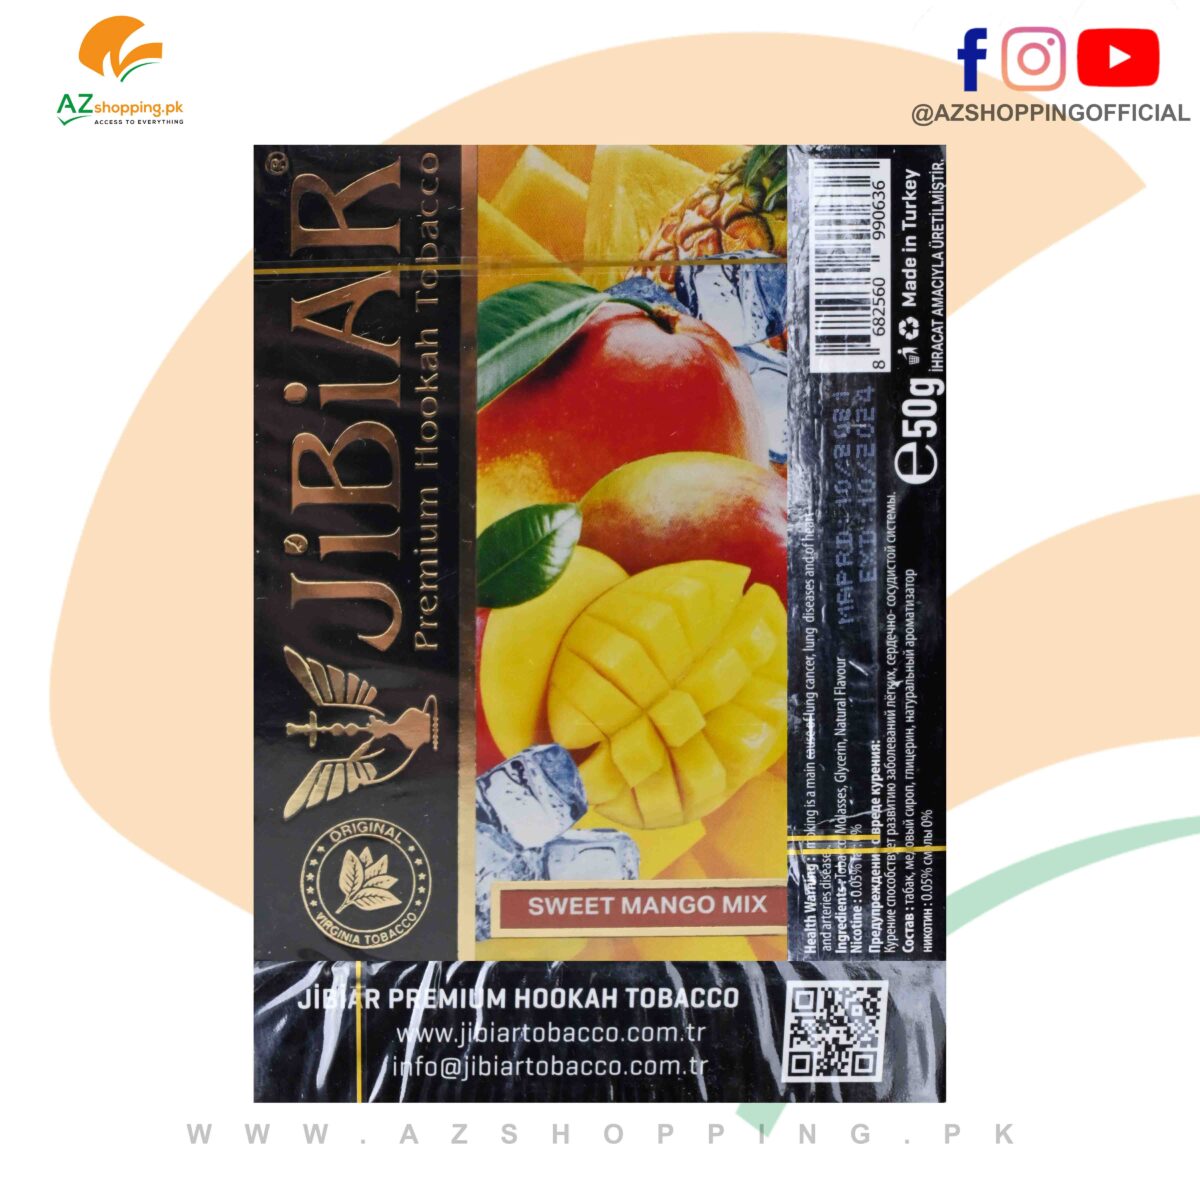 Jibiar Tobacco – Premium Hookah Tobacco Shisha Sweet Mango Mix Flavor – 50 gram